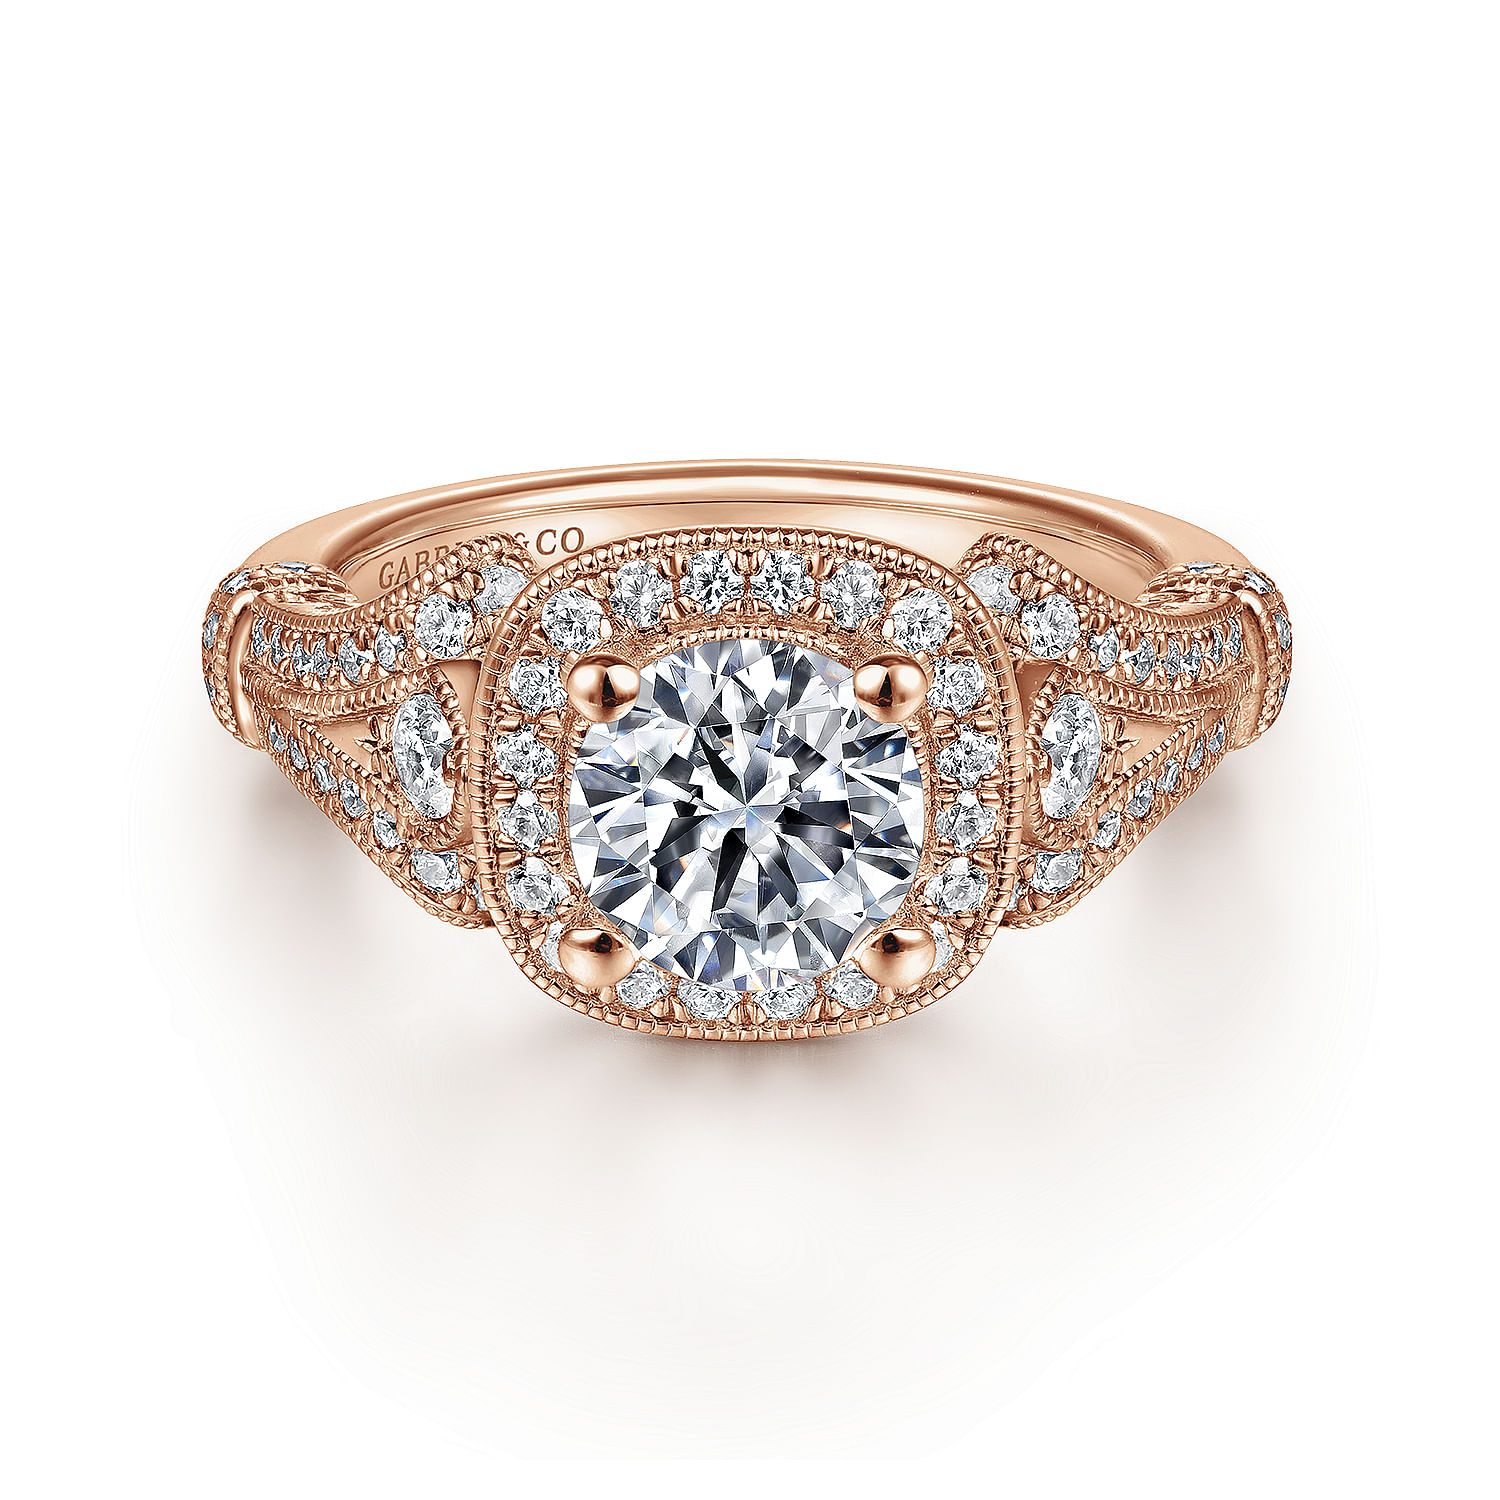 Delilah - Vintage Inspired 14K Rose Gold Cushion Halo Round Diamond Engagement Ring